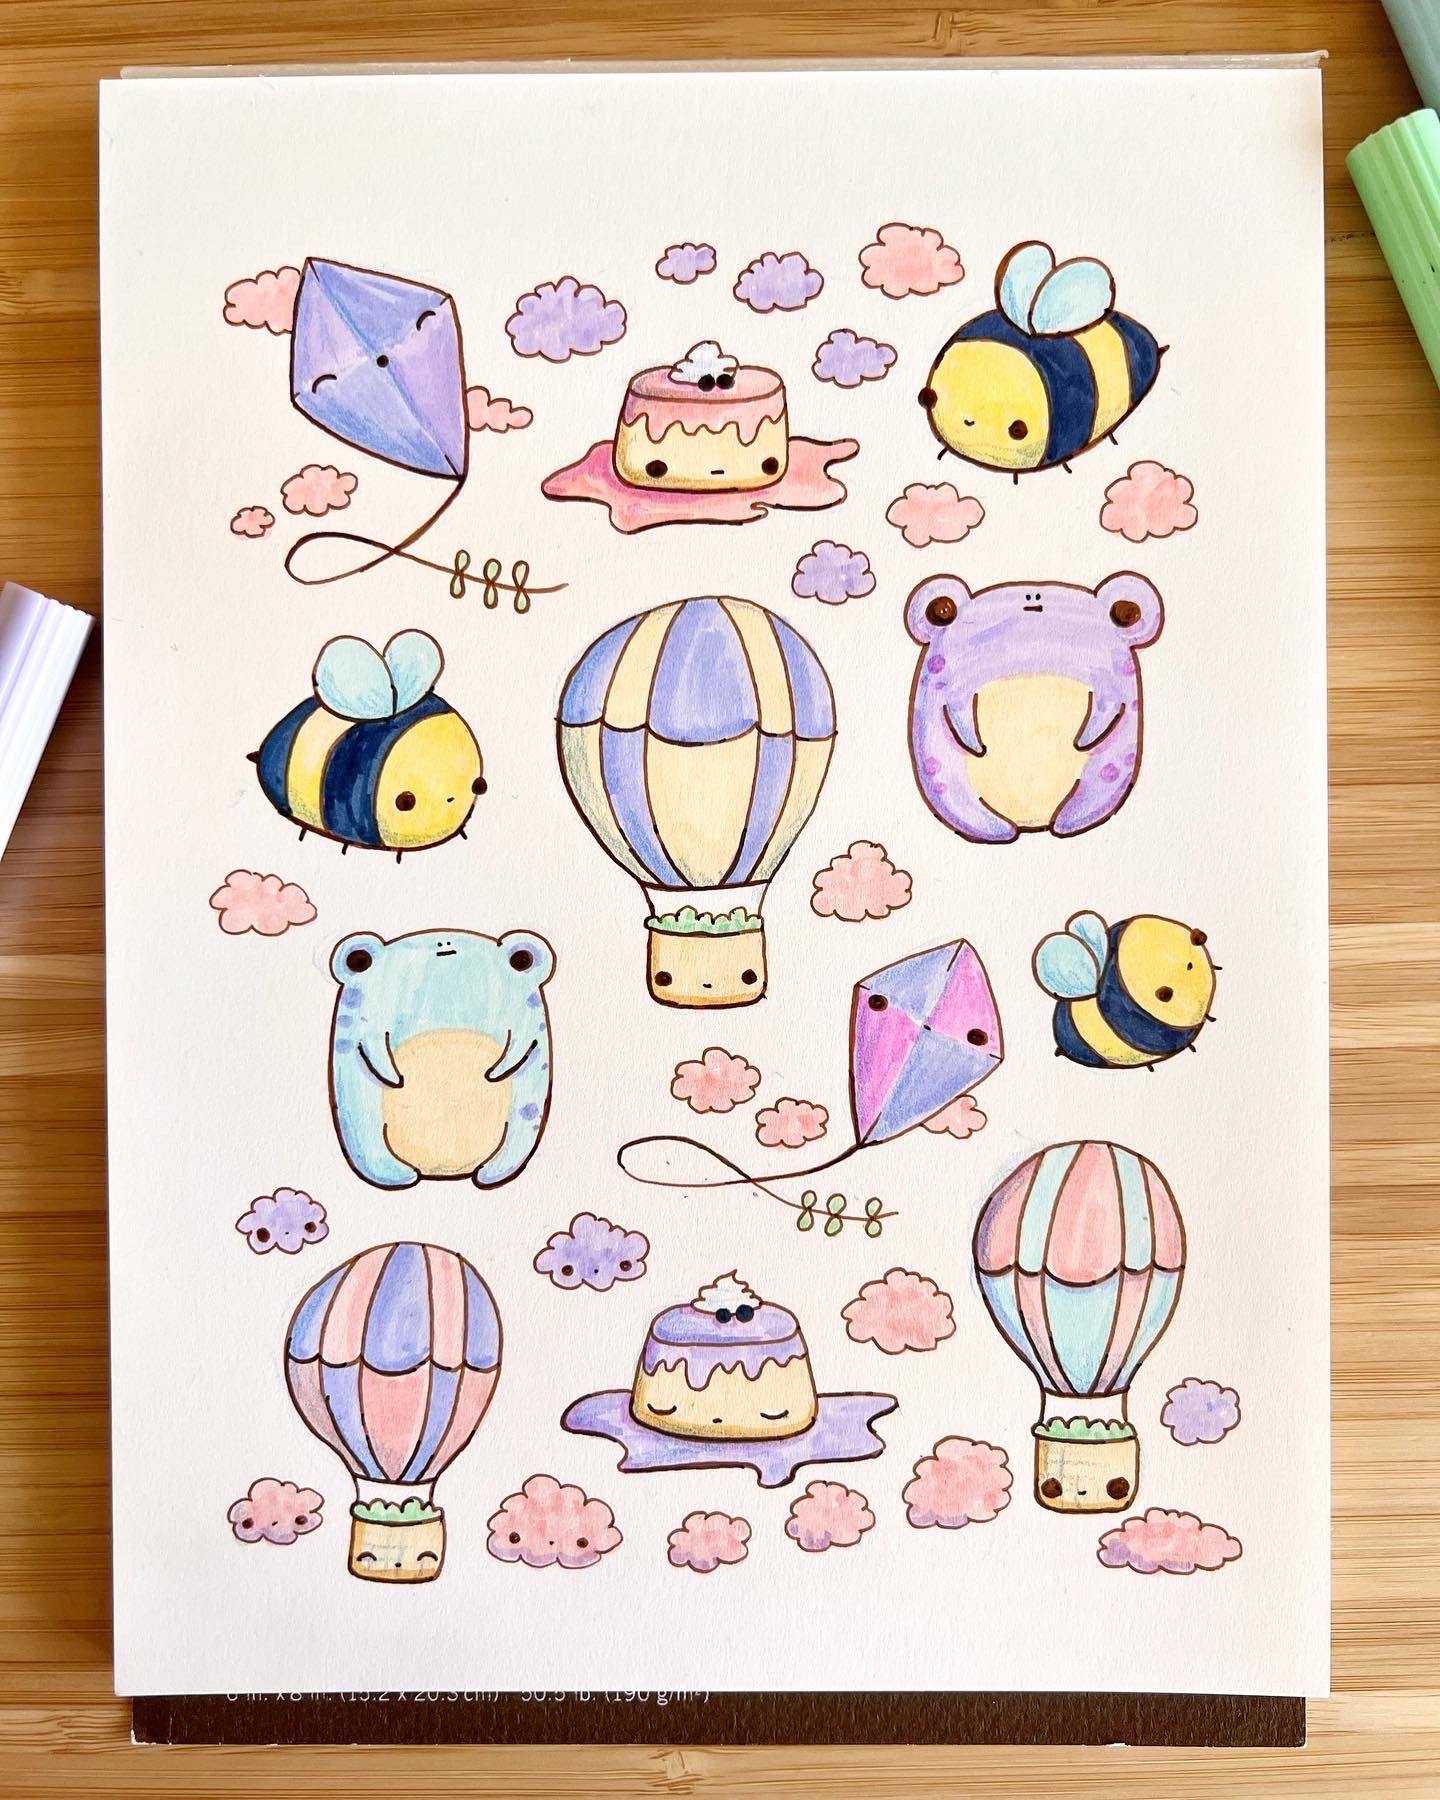 101 Super Cute Things to Draw pre-order bonus